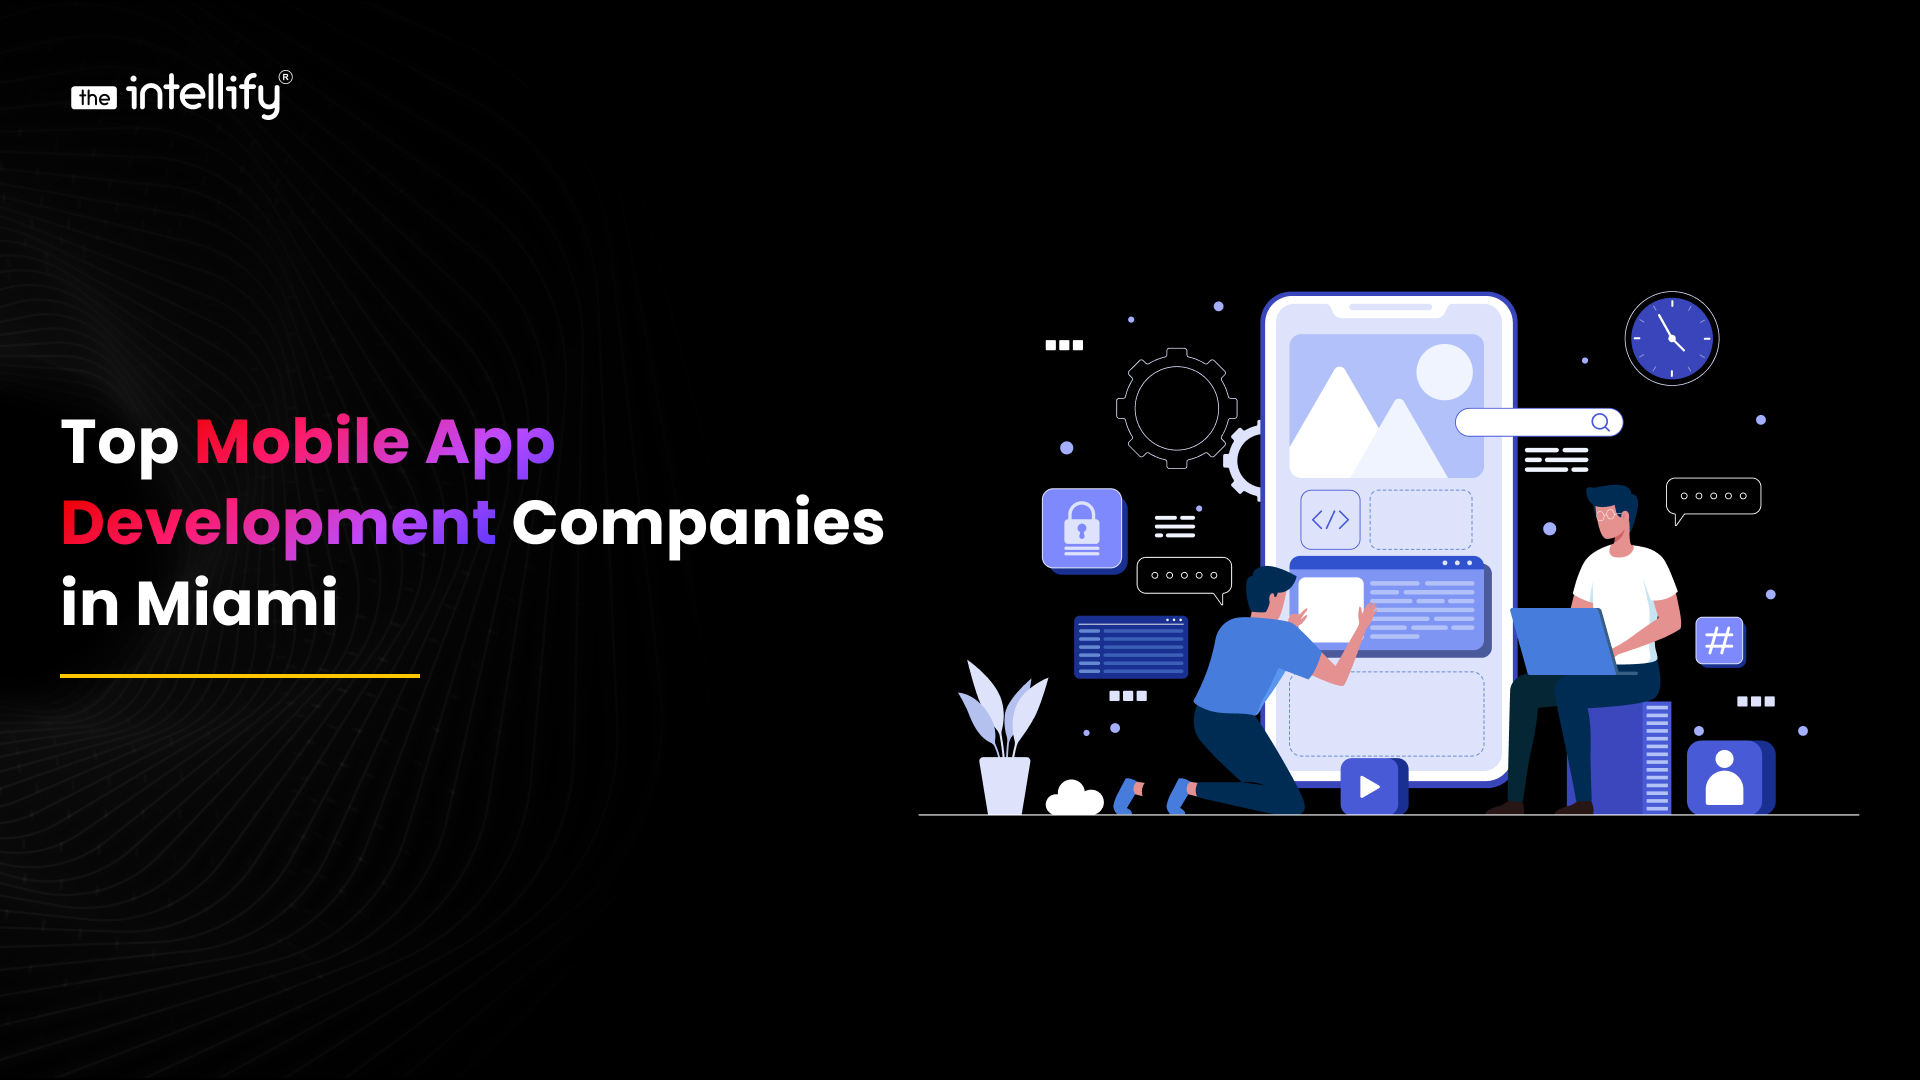 Top Mobile App Development Companies in Miami